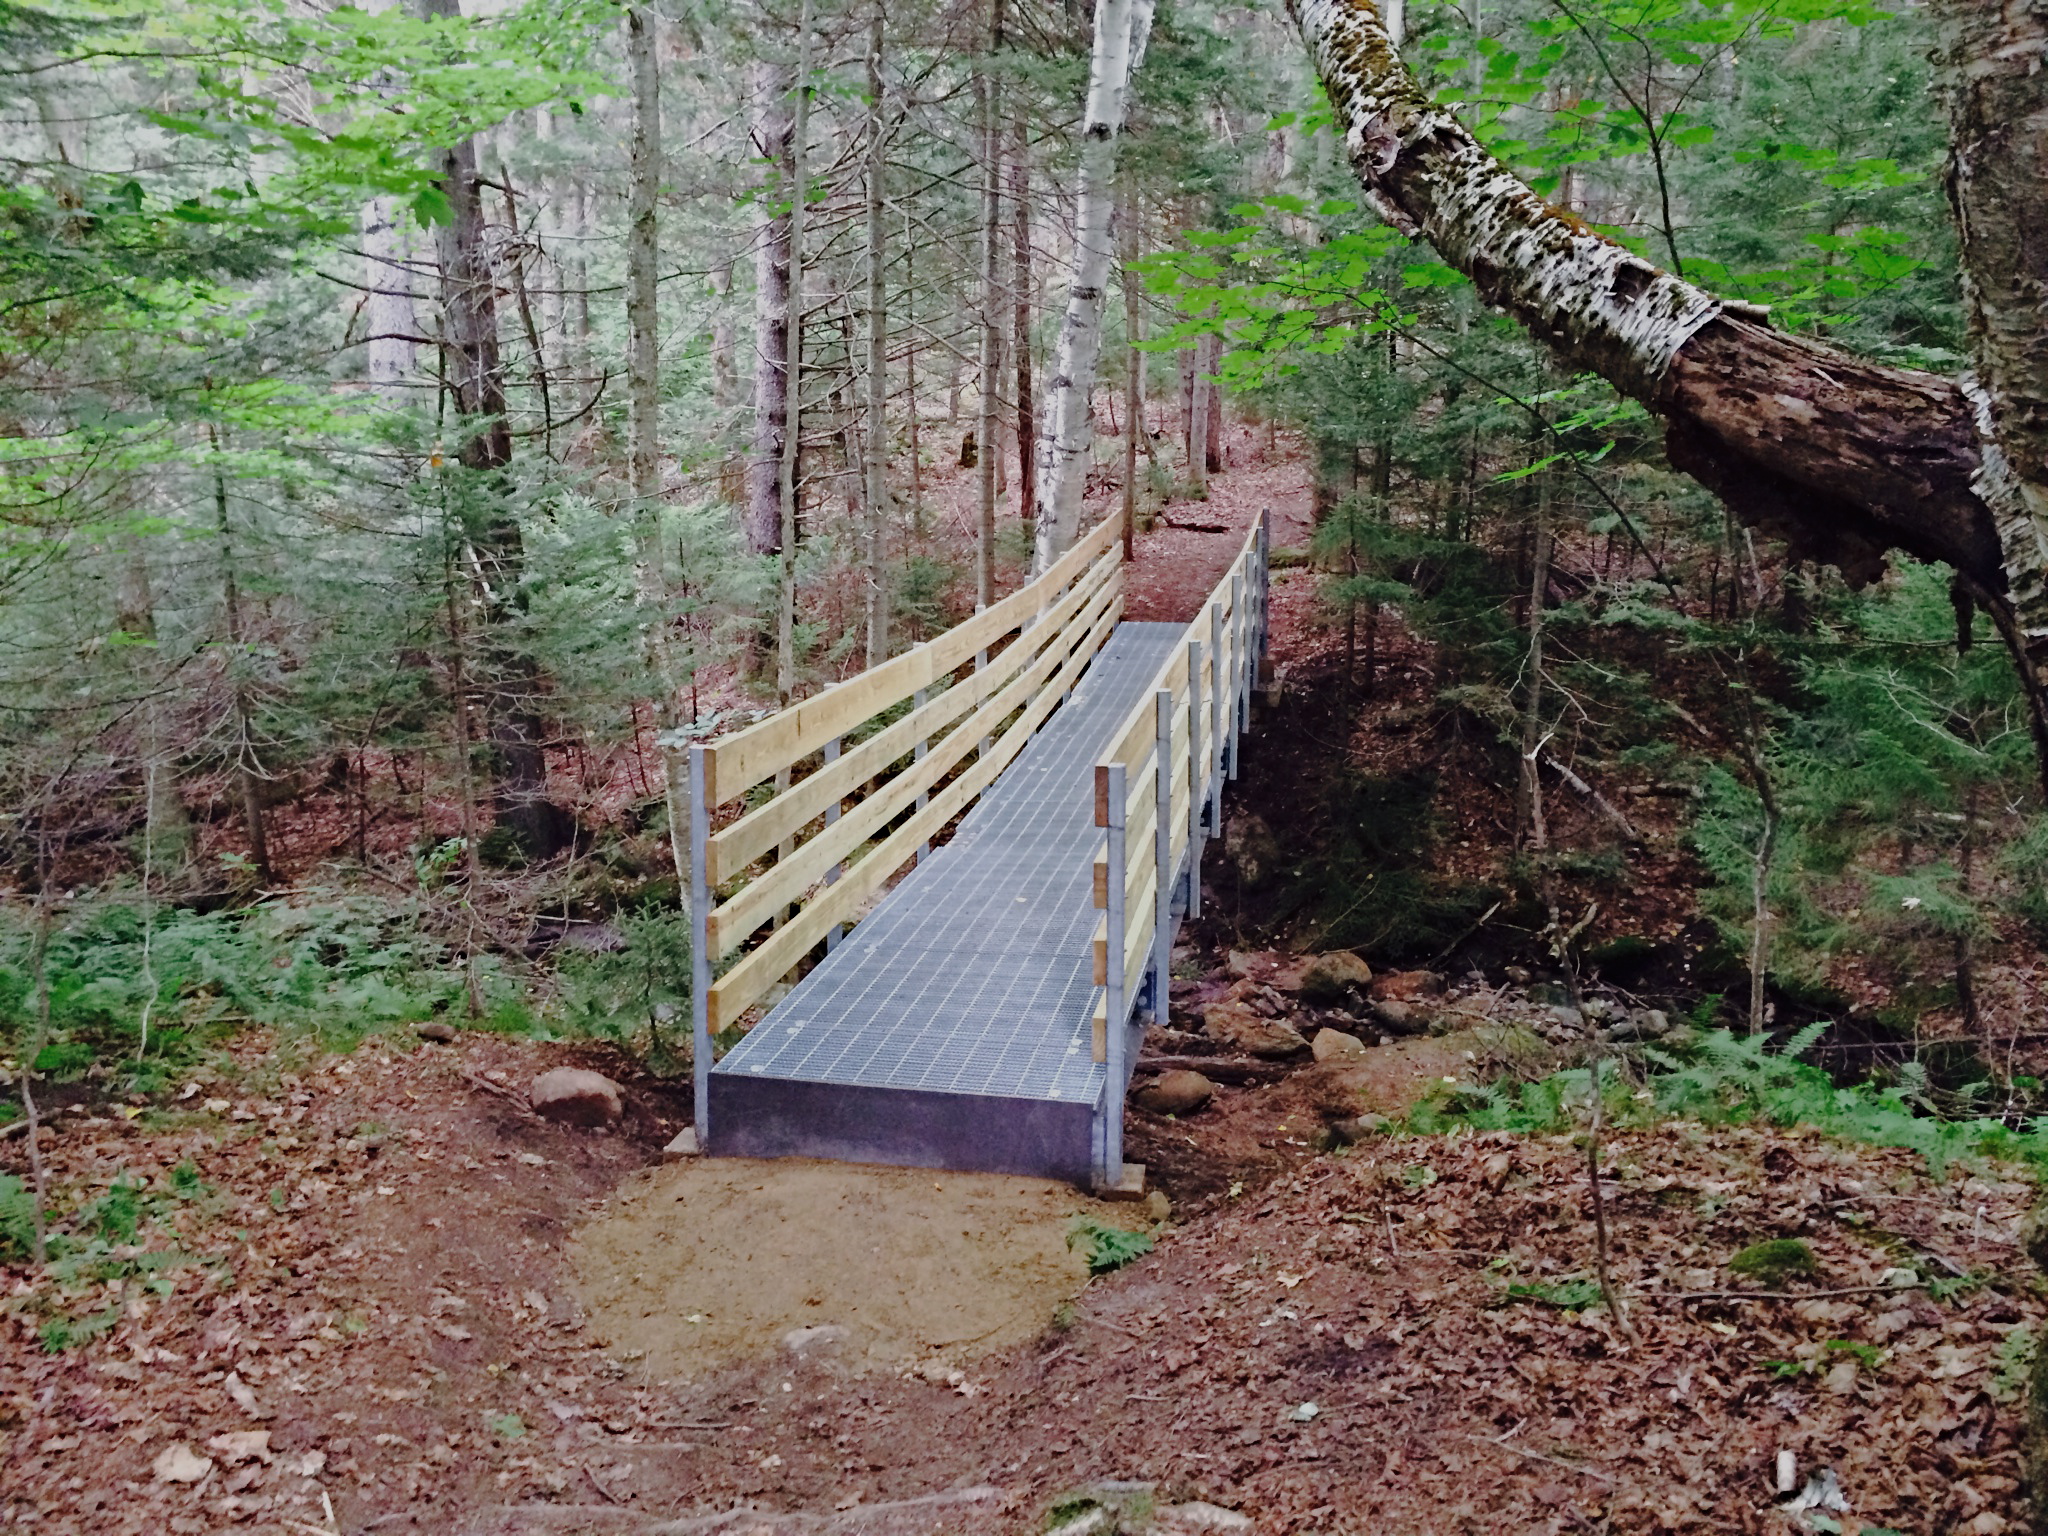  35ft steel bridge on Mount Olga trail in Molly Stark State Park, Vermont. 